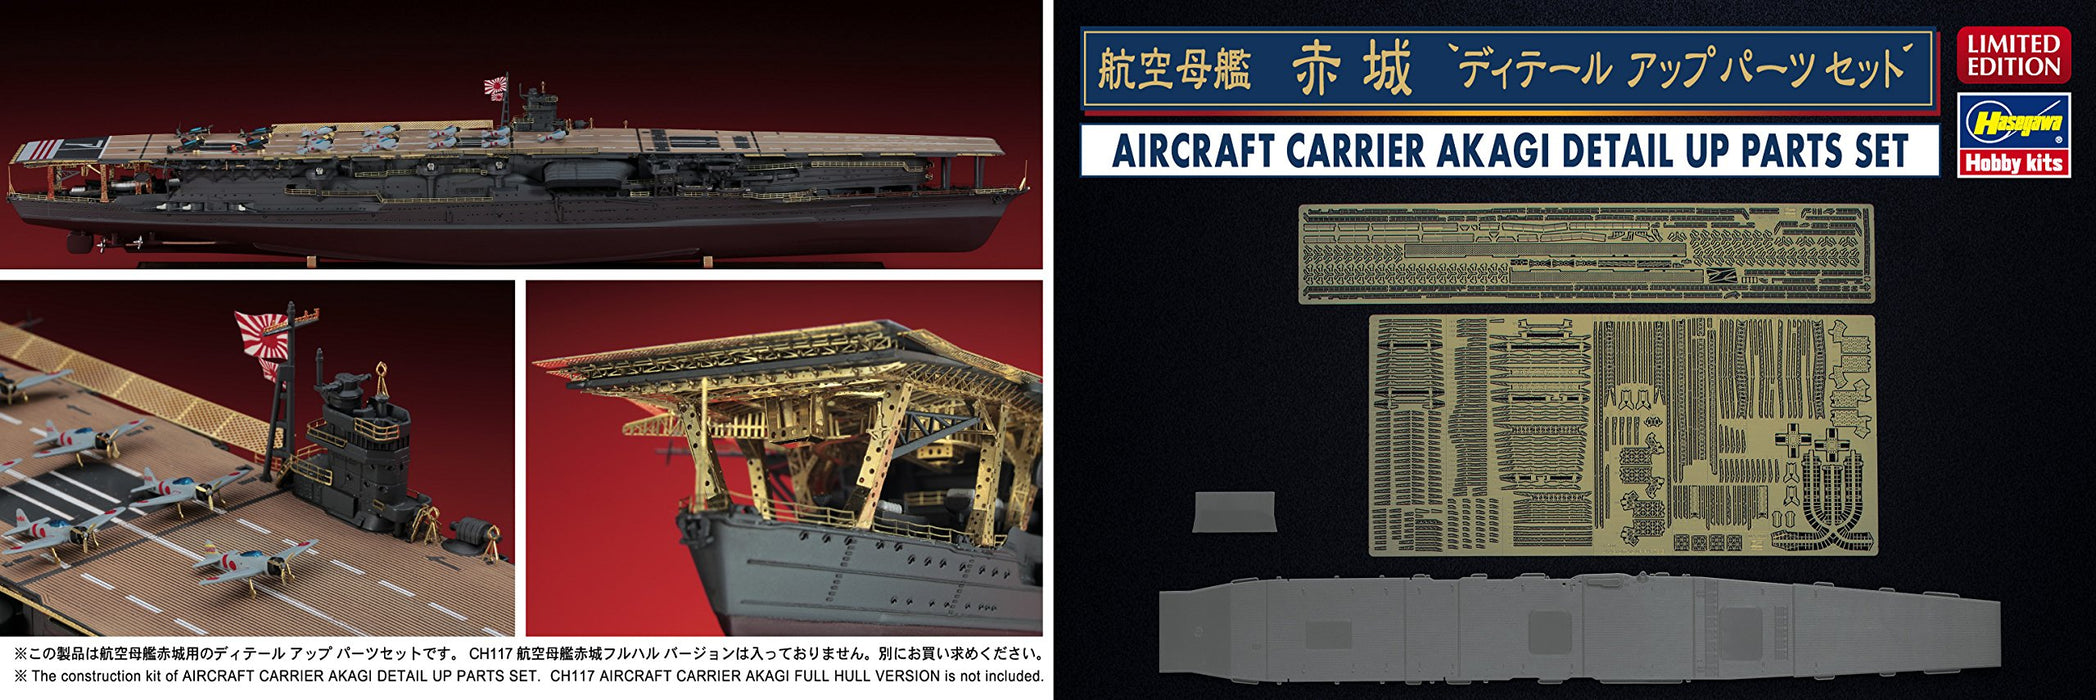 Hasegawa 30036 1/700 Japanischer Marine Flugzeugträger Akagi Detail Up Parts Set Plastikmodellteile